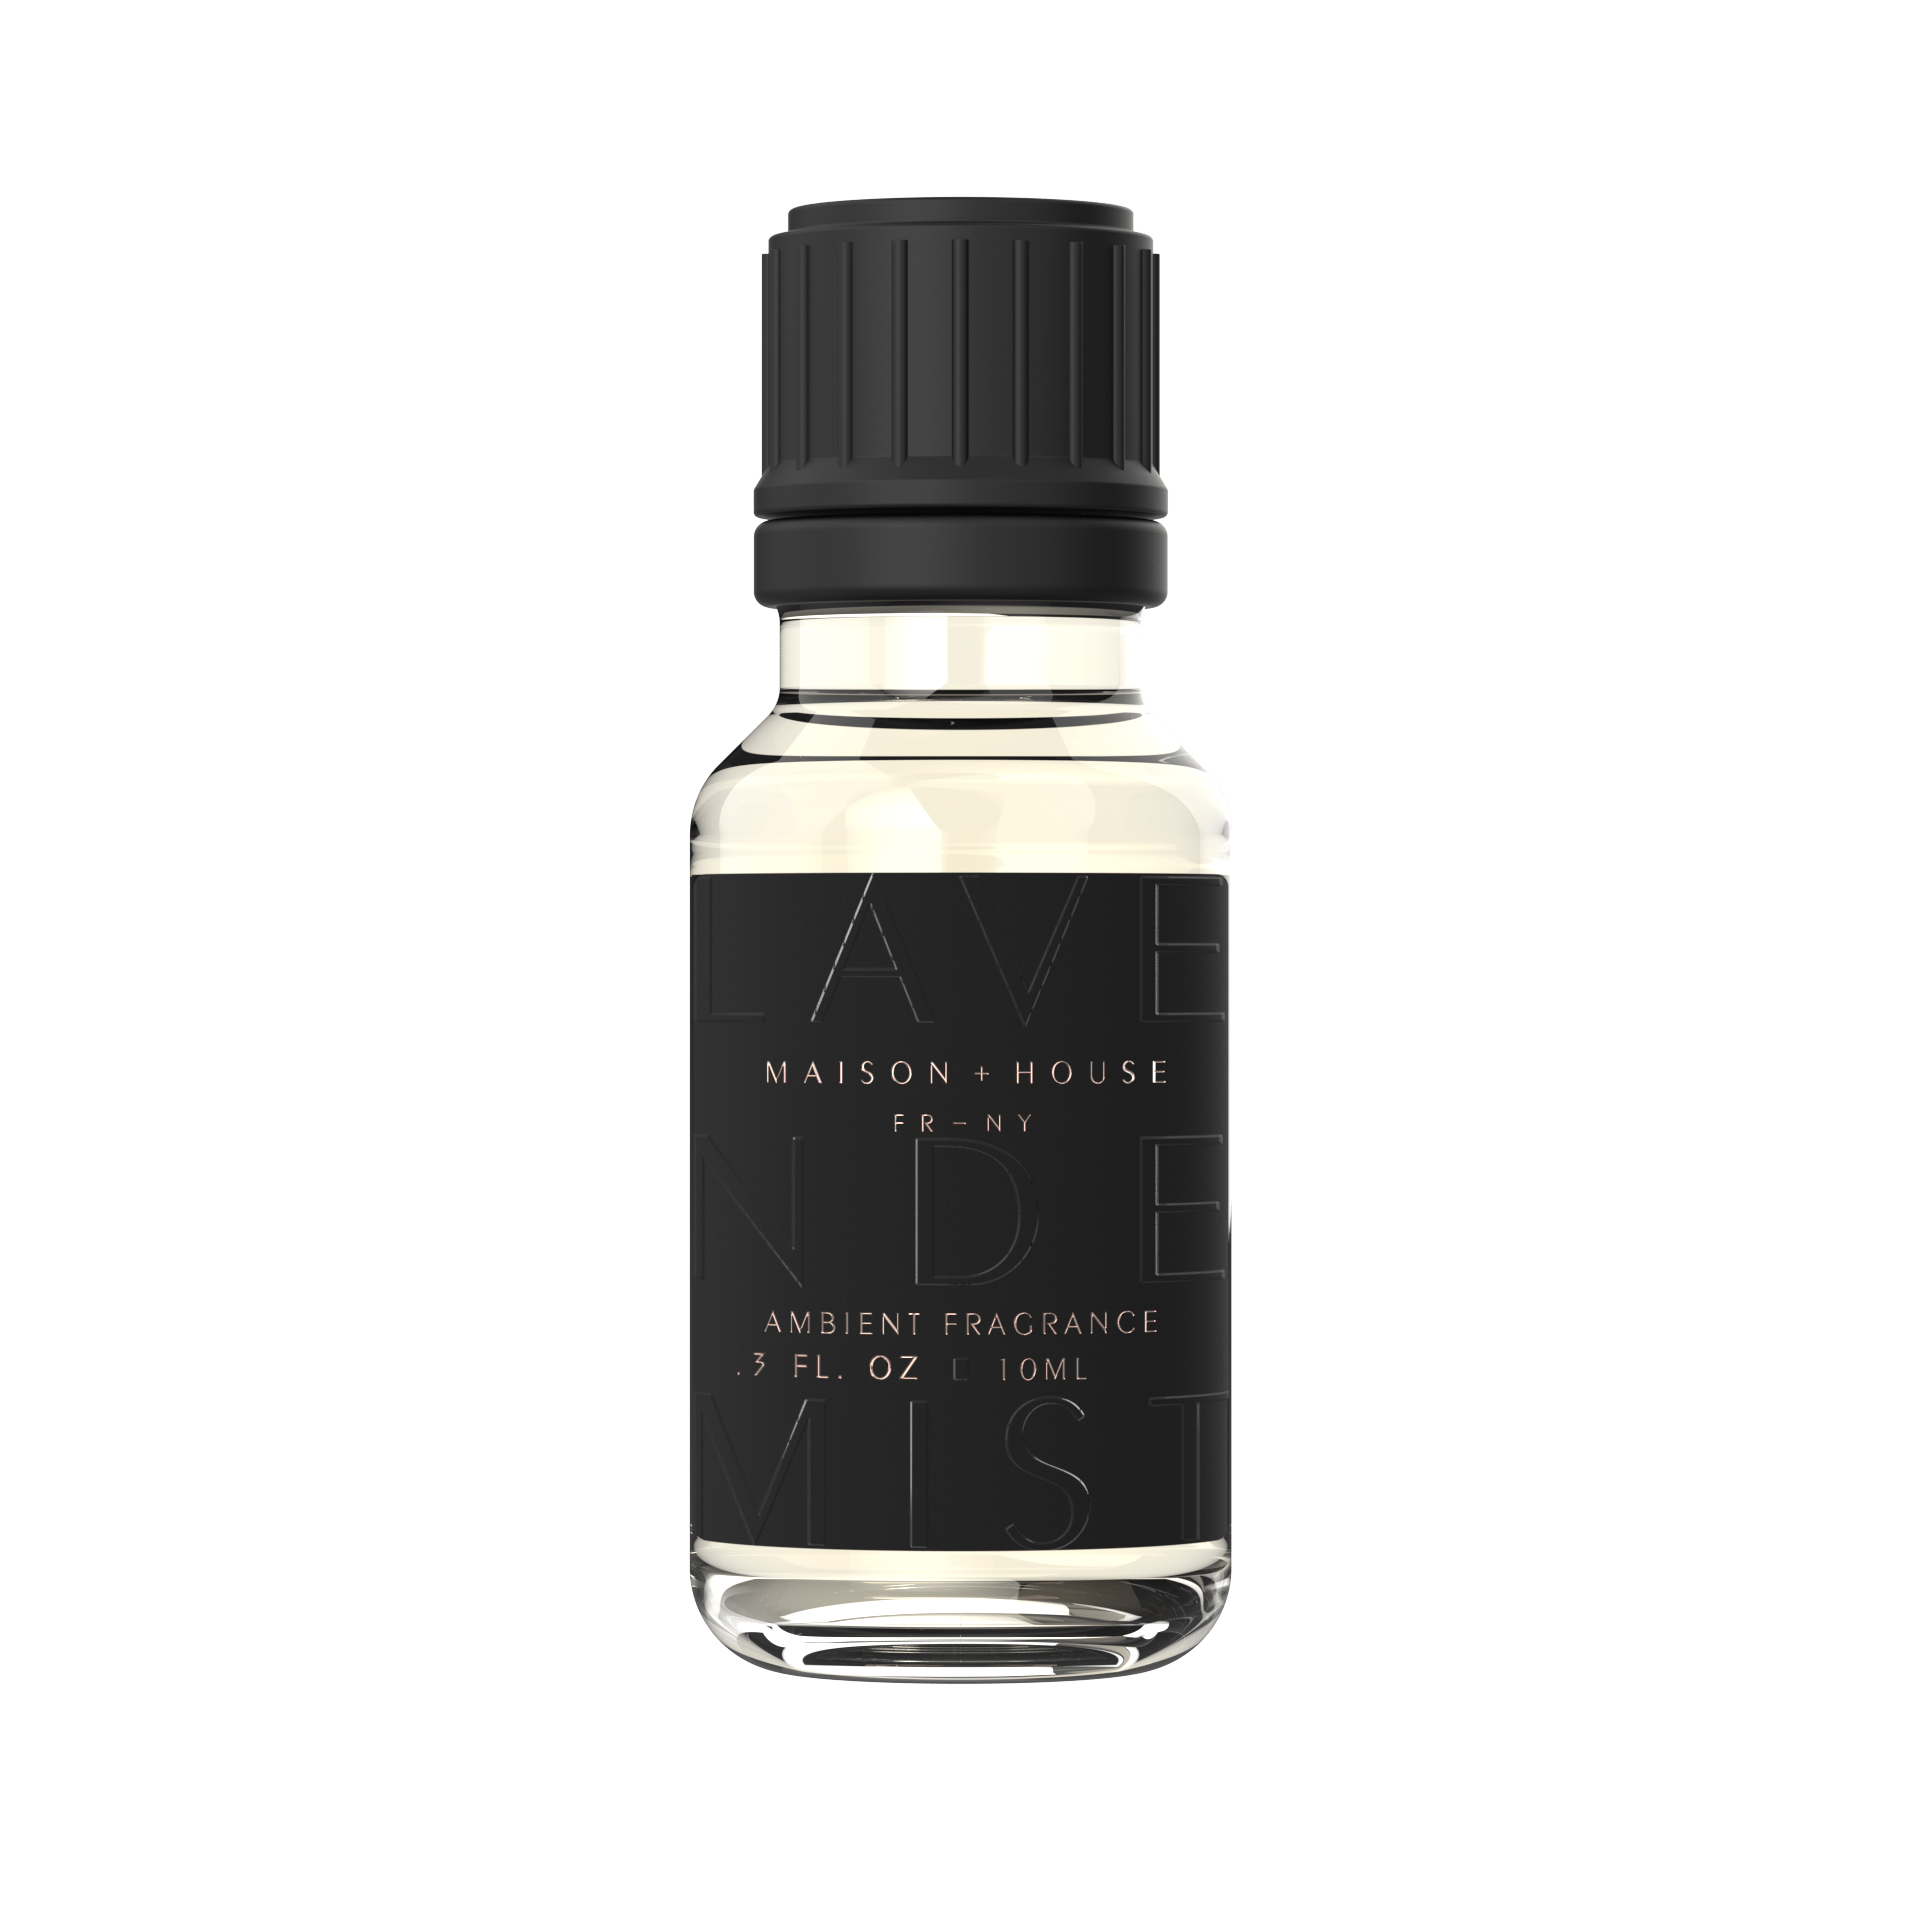 Maison+House Lavende Mist French Ambient Fragrance